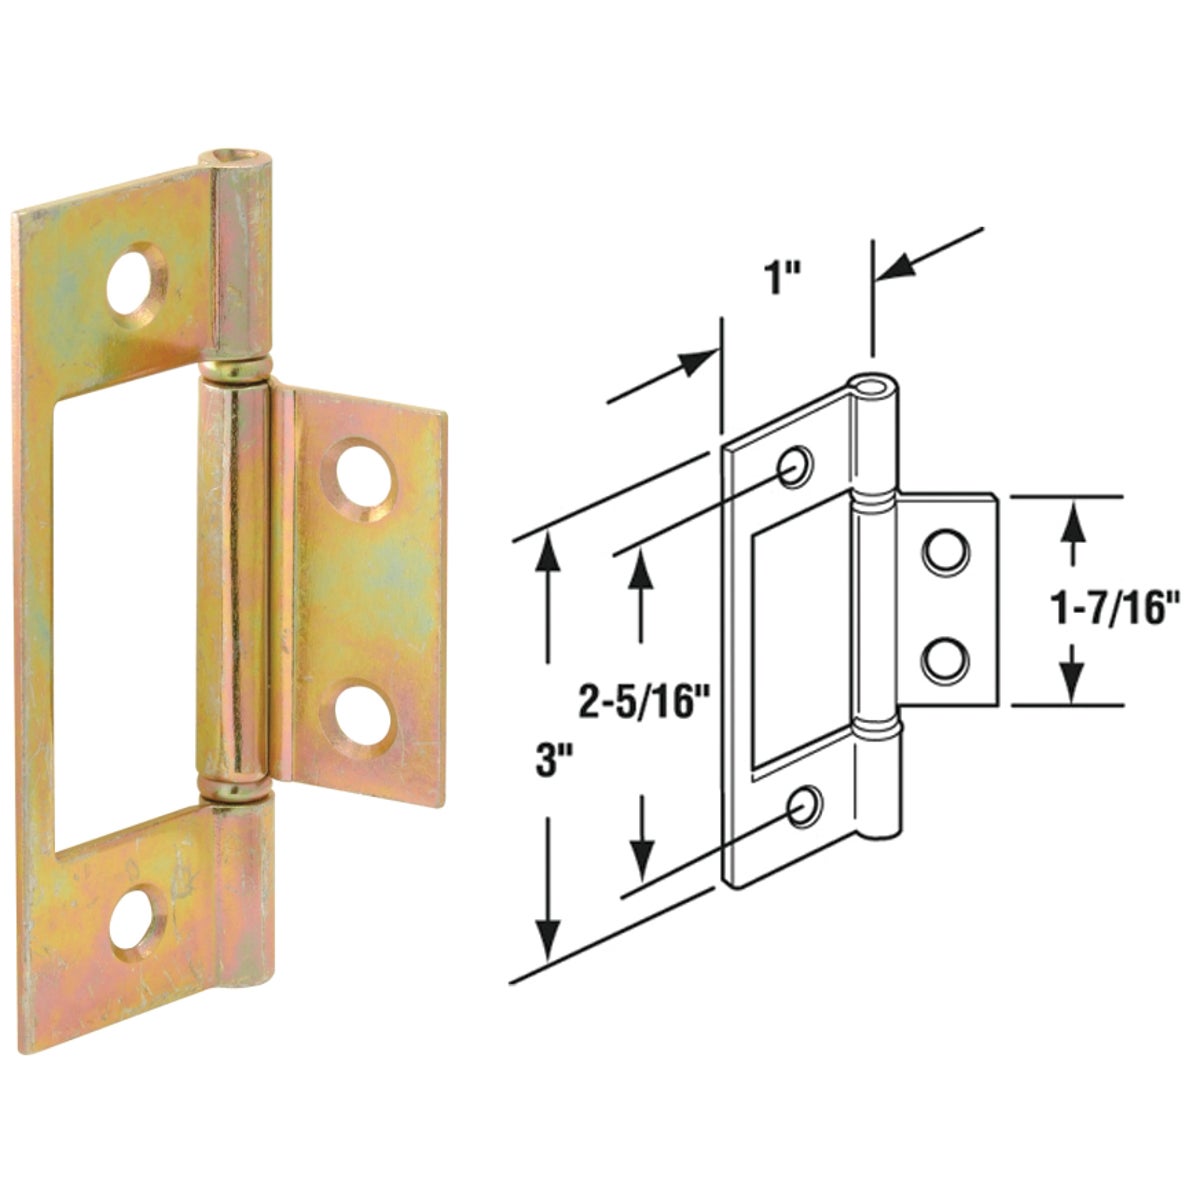 Item 205397, For use on wood bi-fold closet doors. Brass-plated.